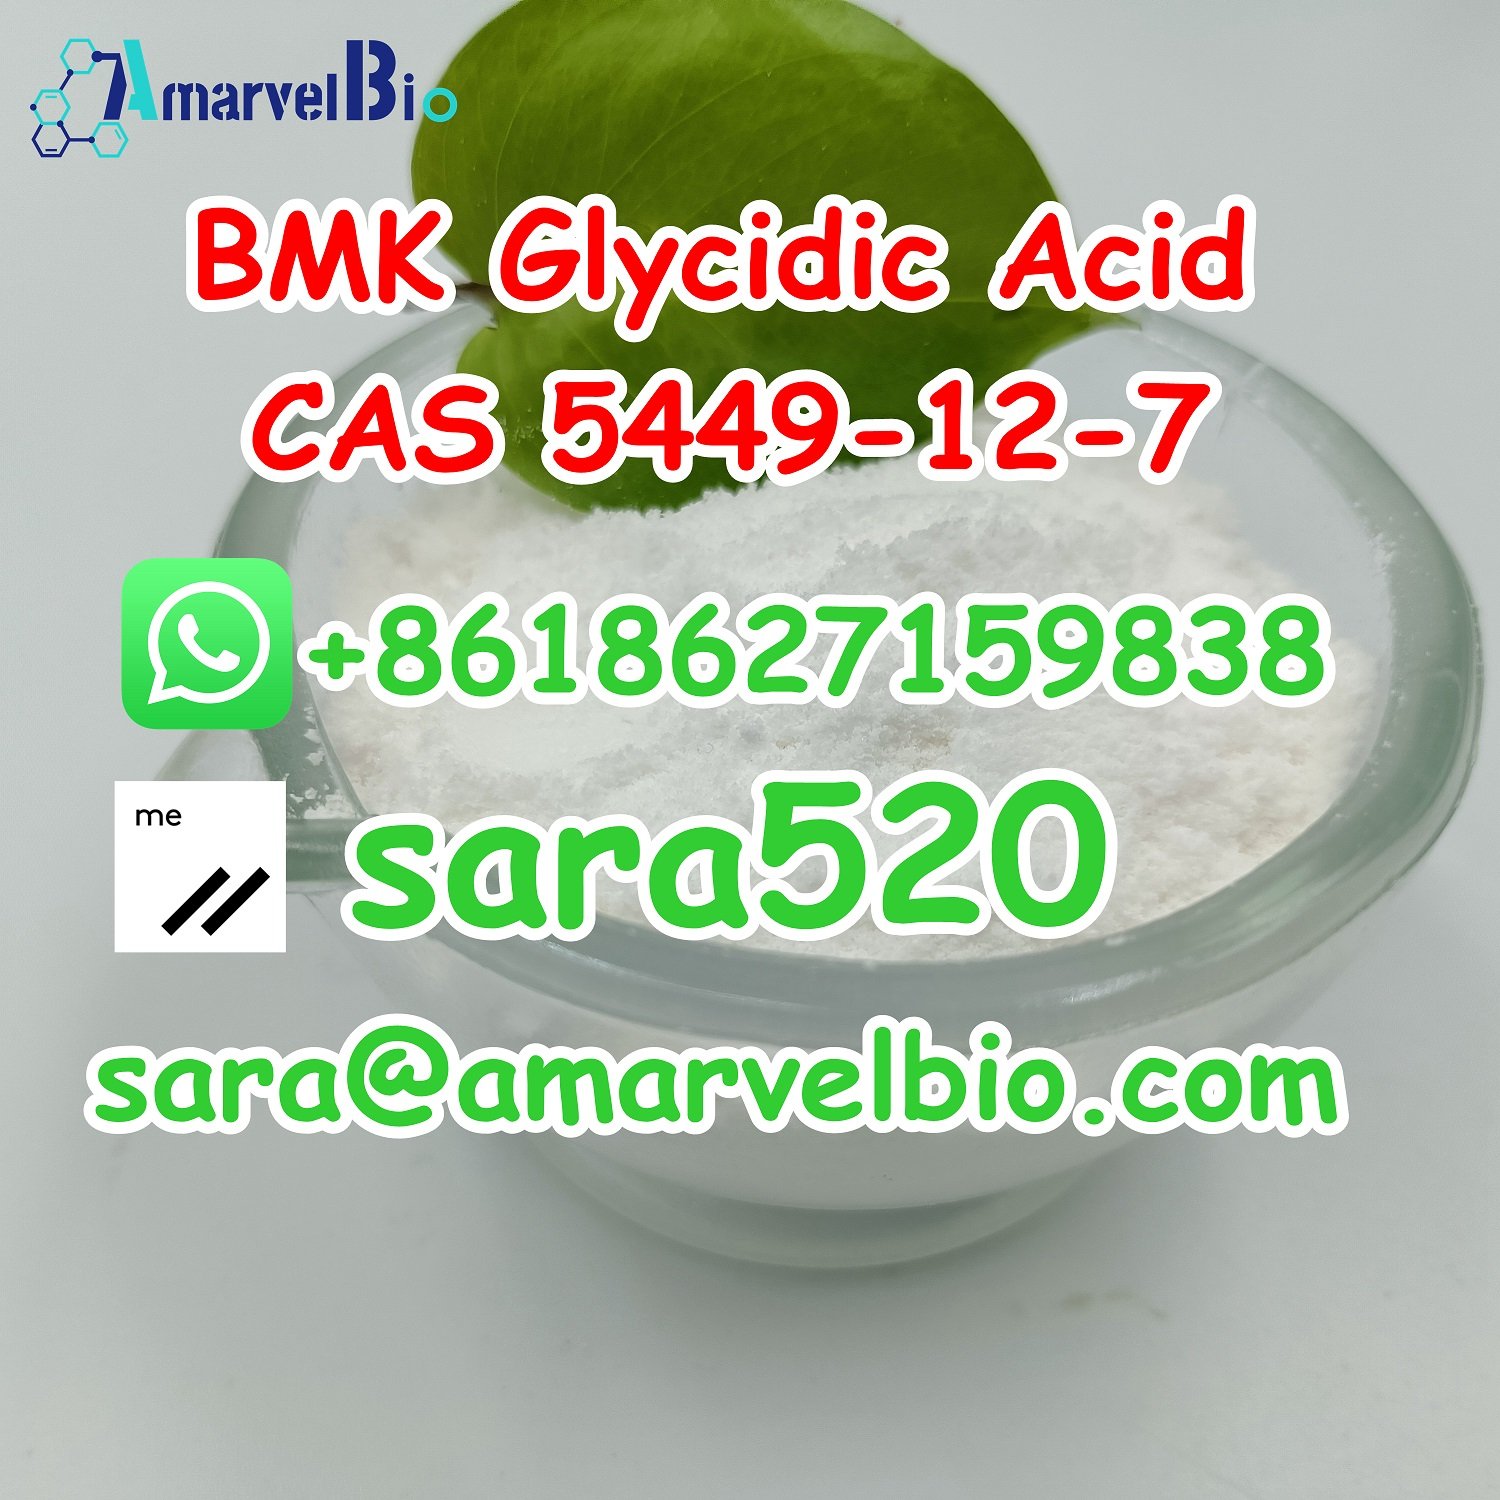 +8618627159838 CAS 5449-12-7 BMK Glycidic Acid Manufacturer Supply